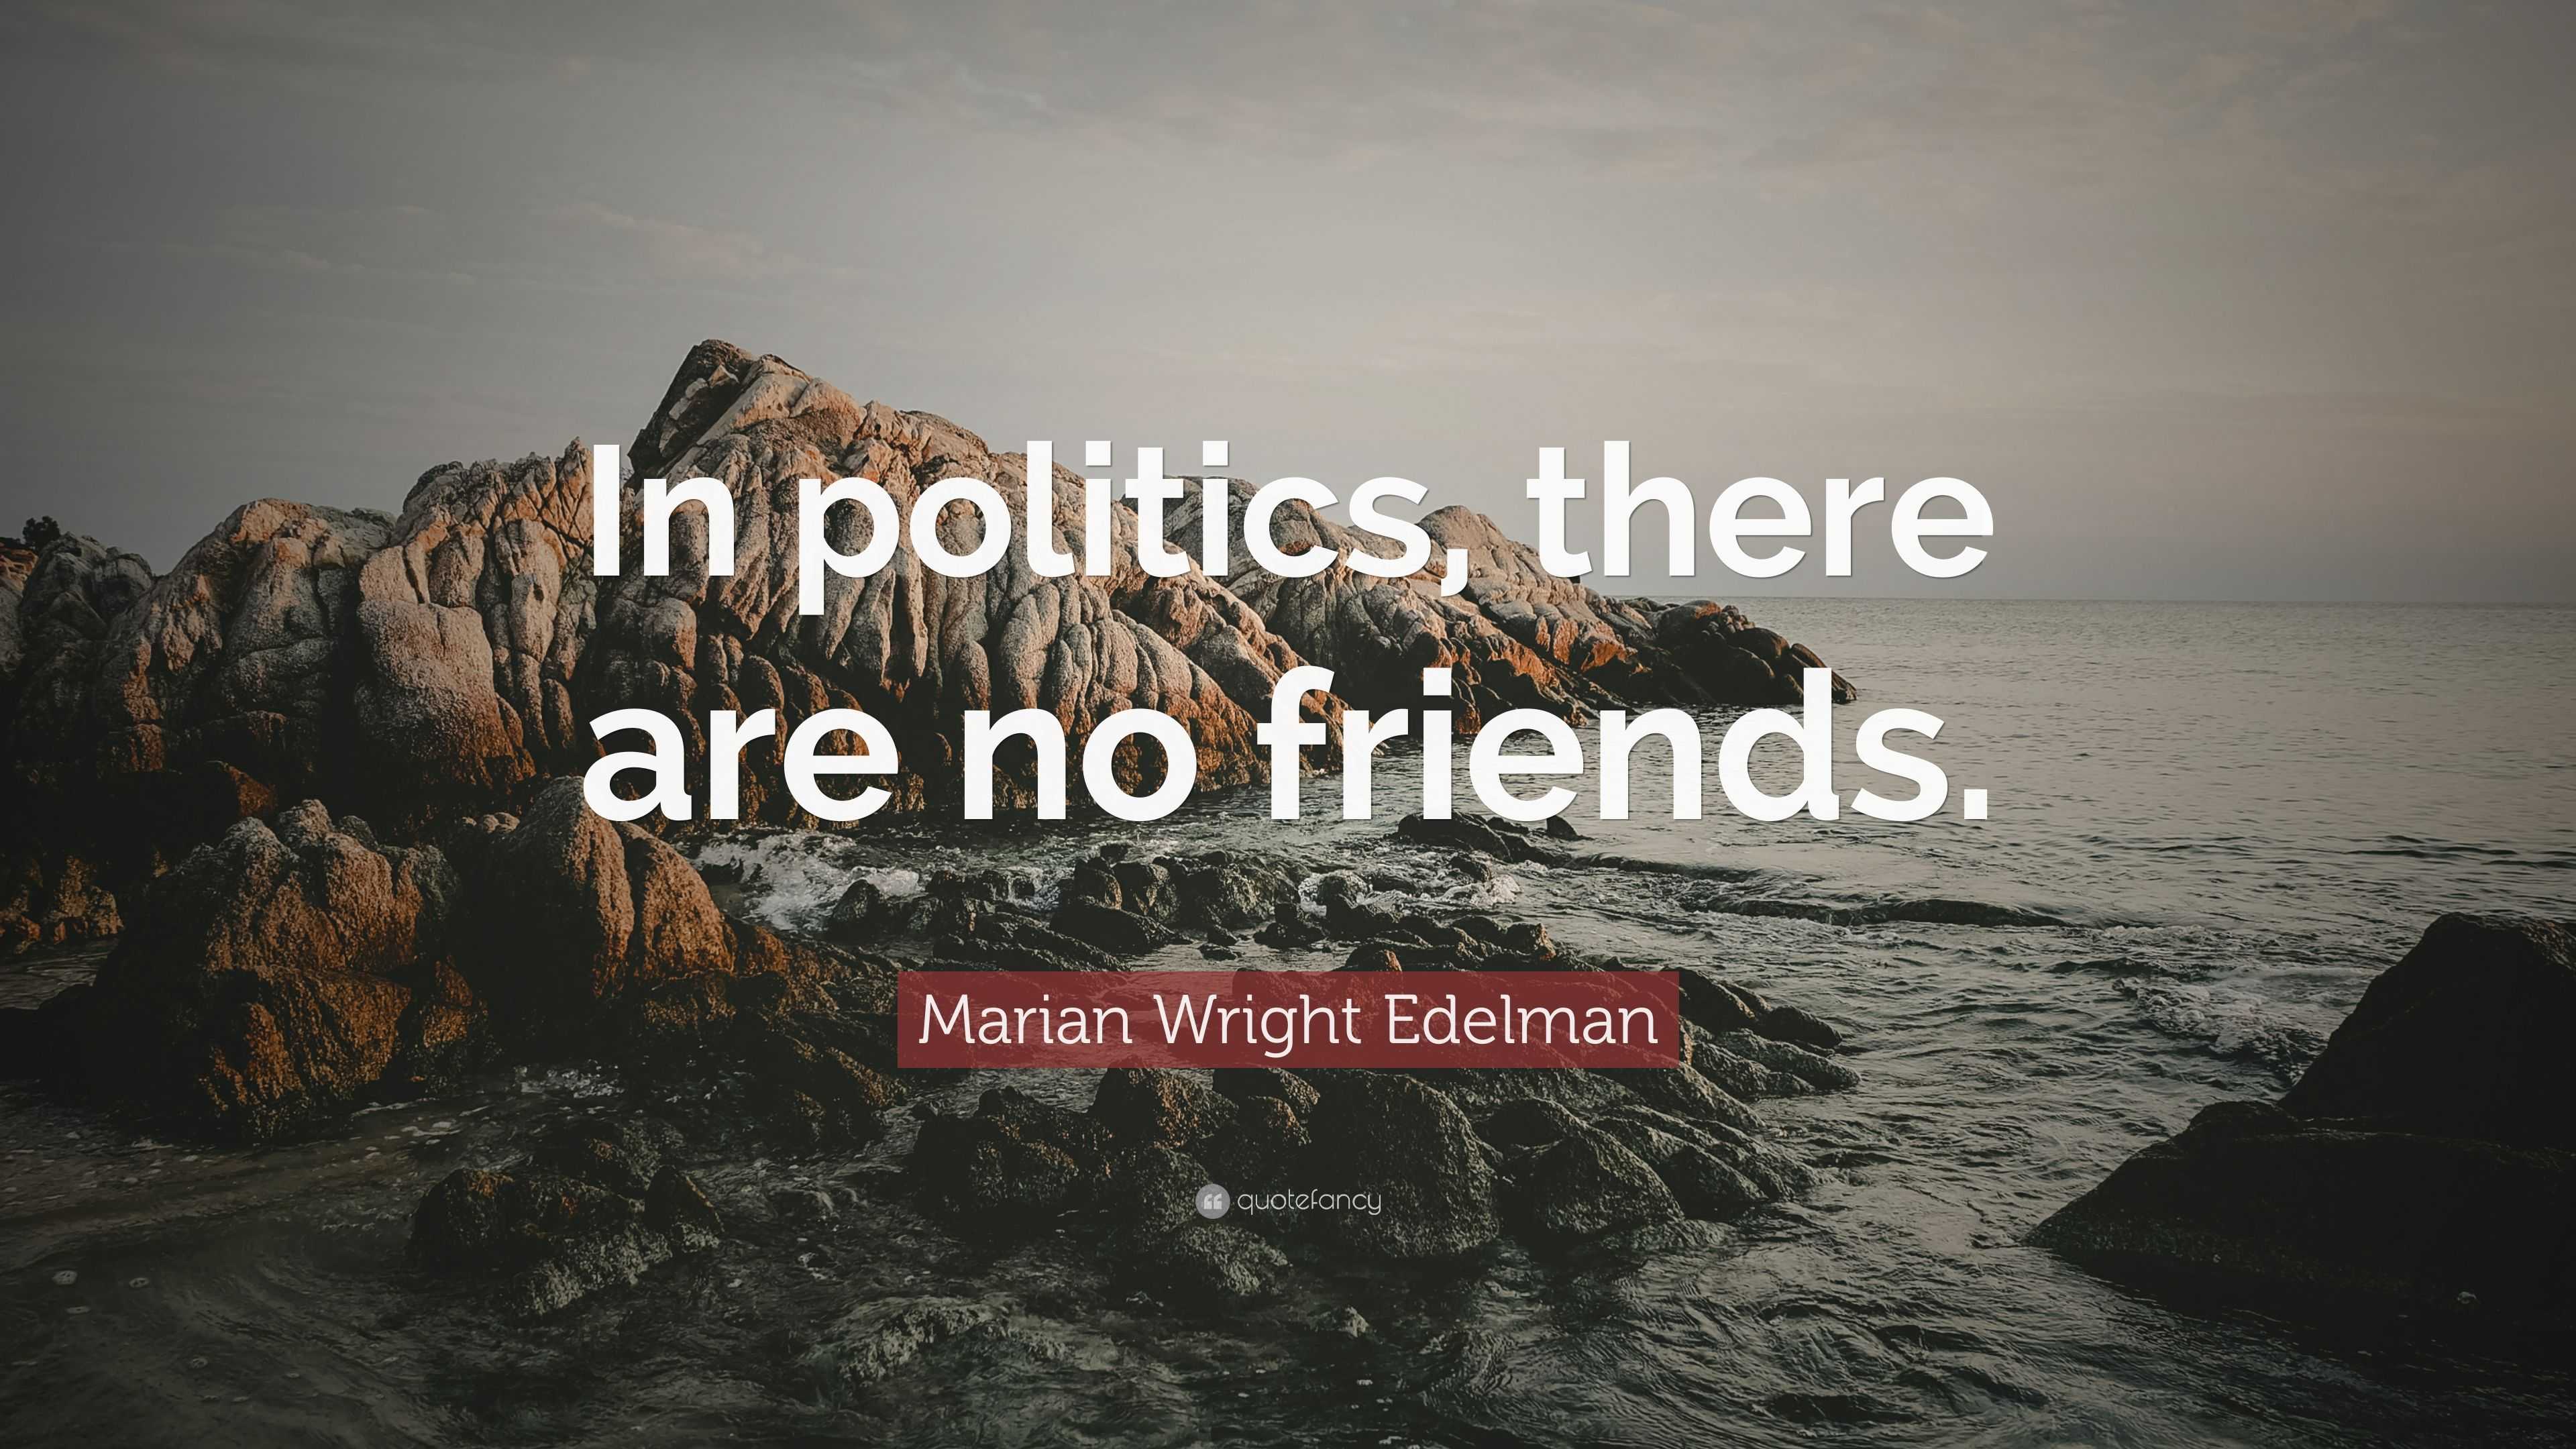 Marian Wright Edelman Quote: “In politics, there are no friends.”